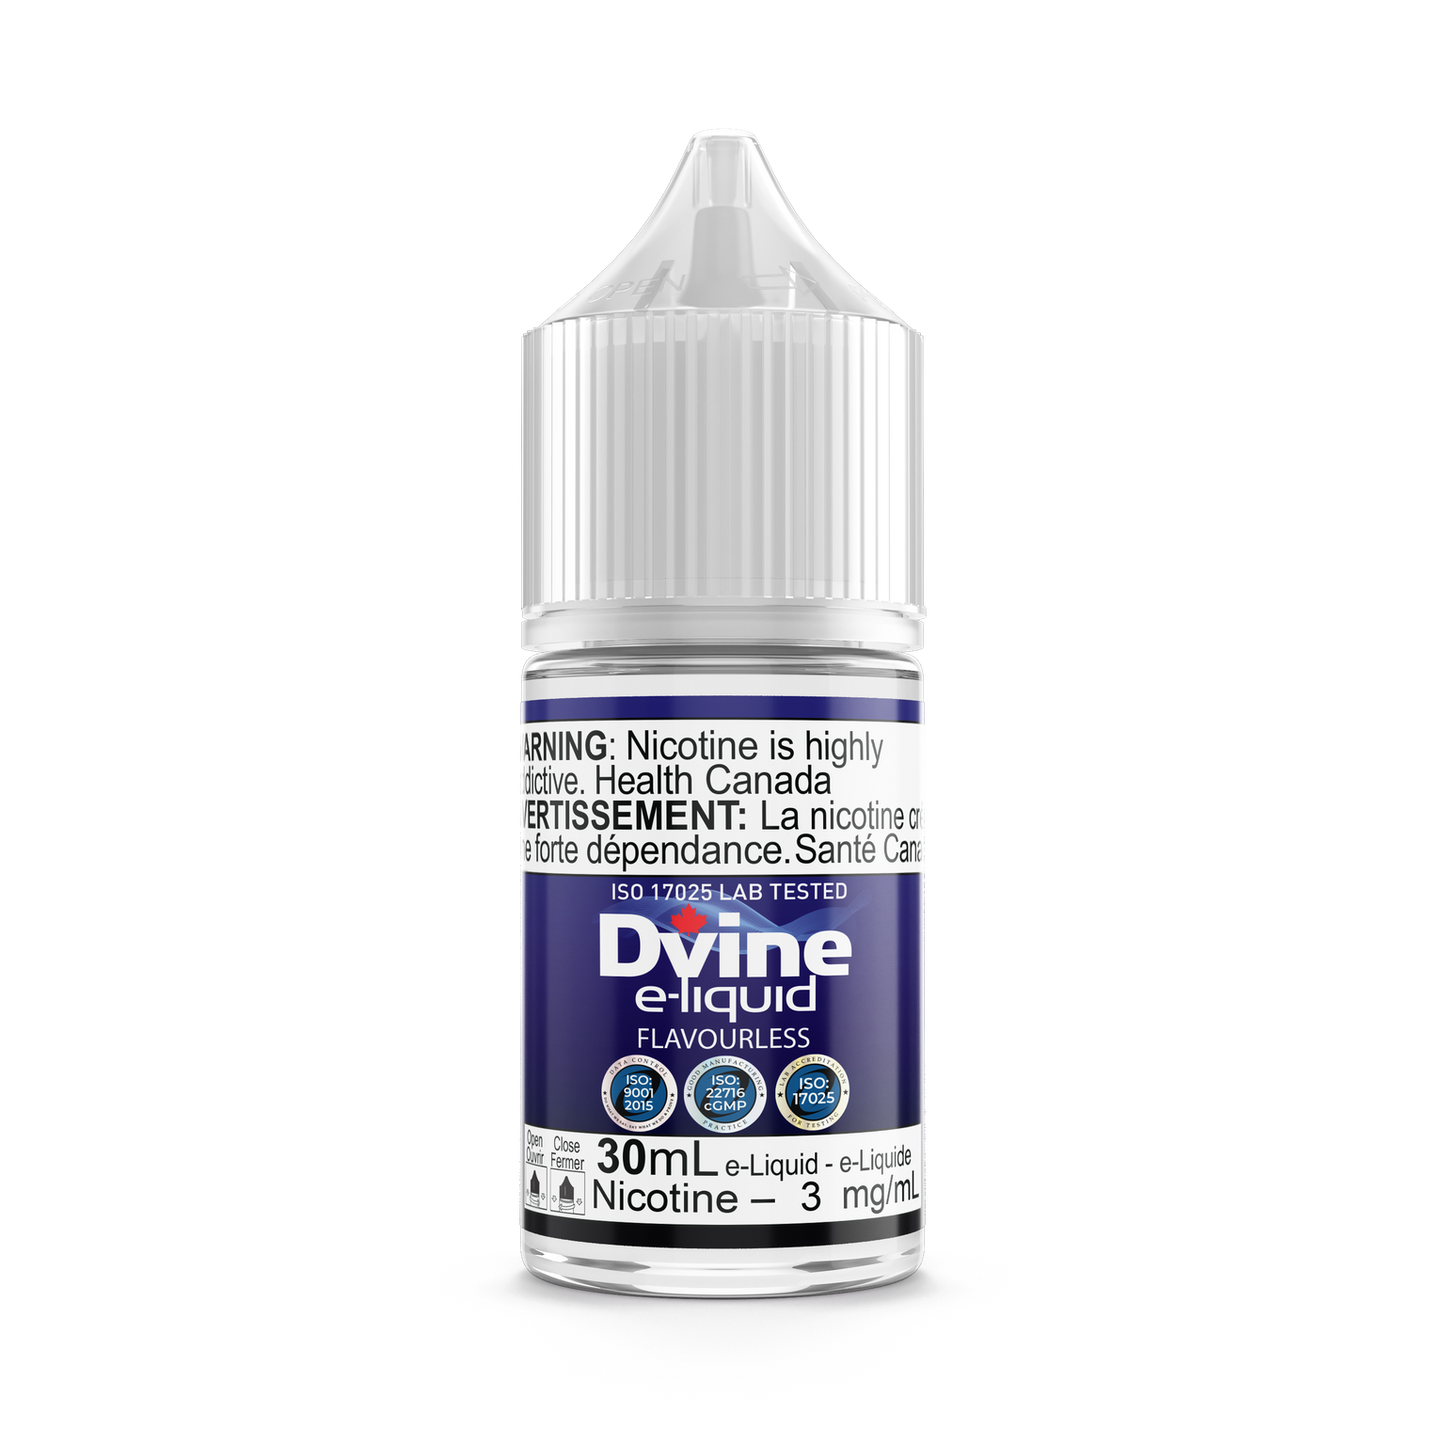 Dvine - Flavourless